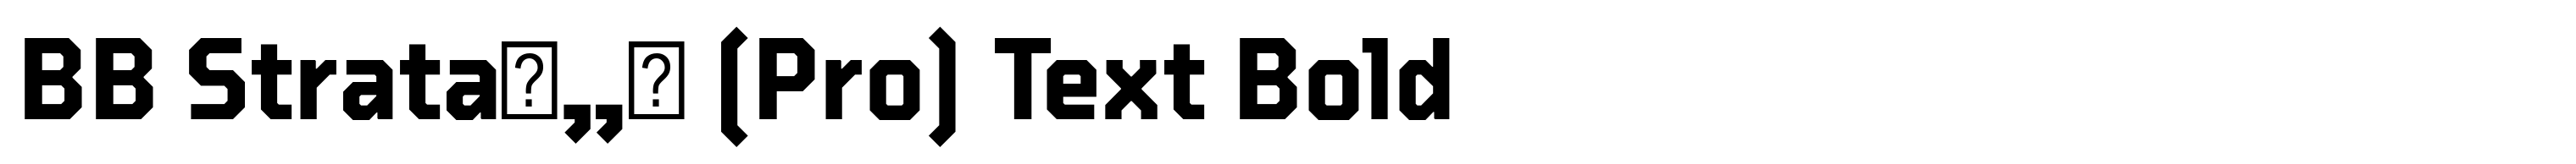 BB Strataв„ў (Pro) Text Bold